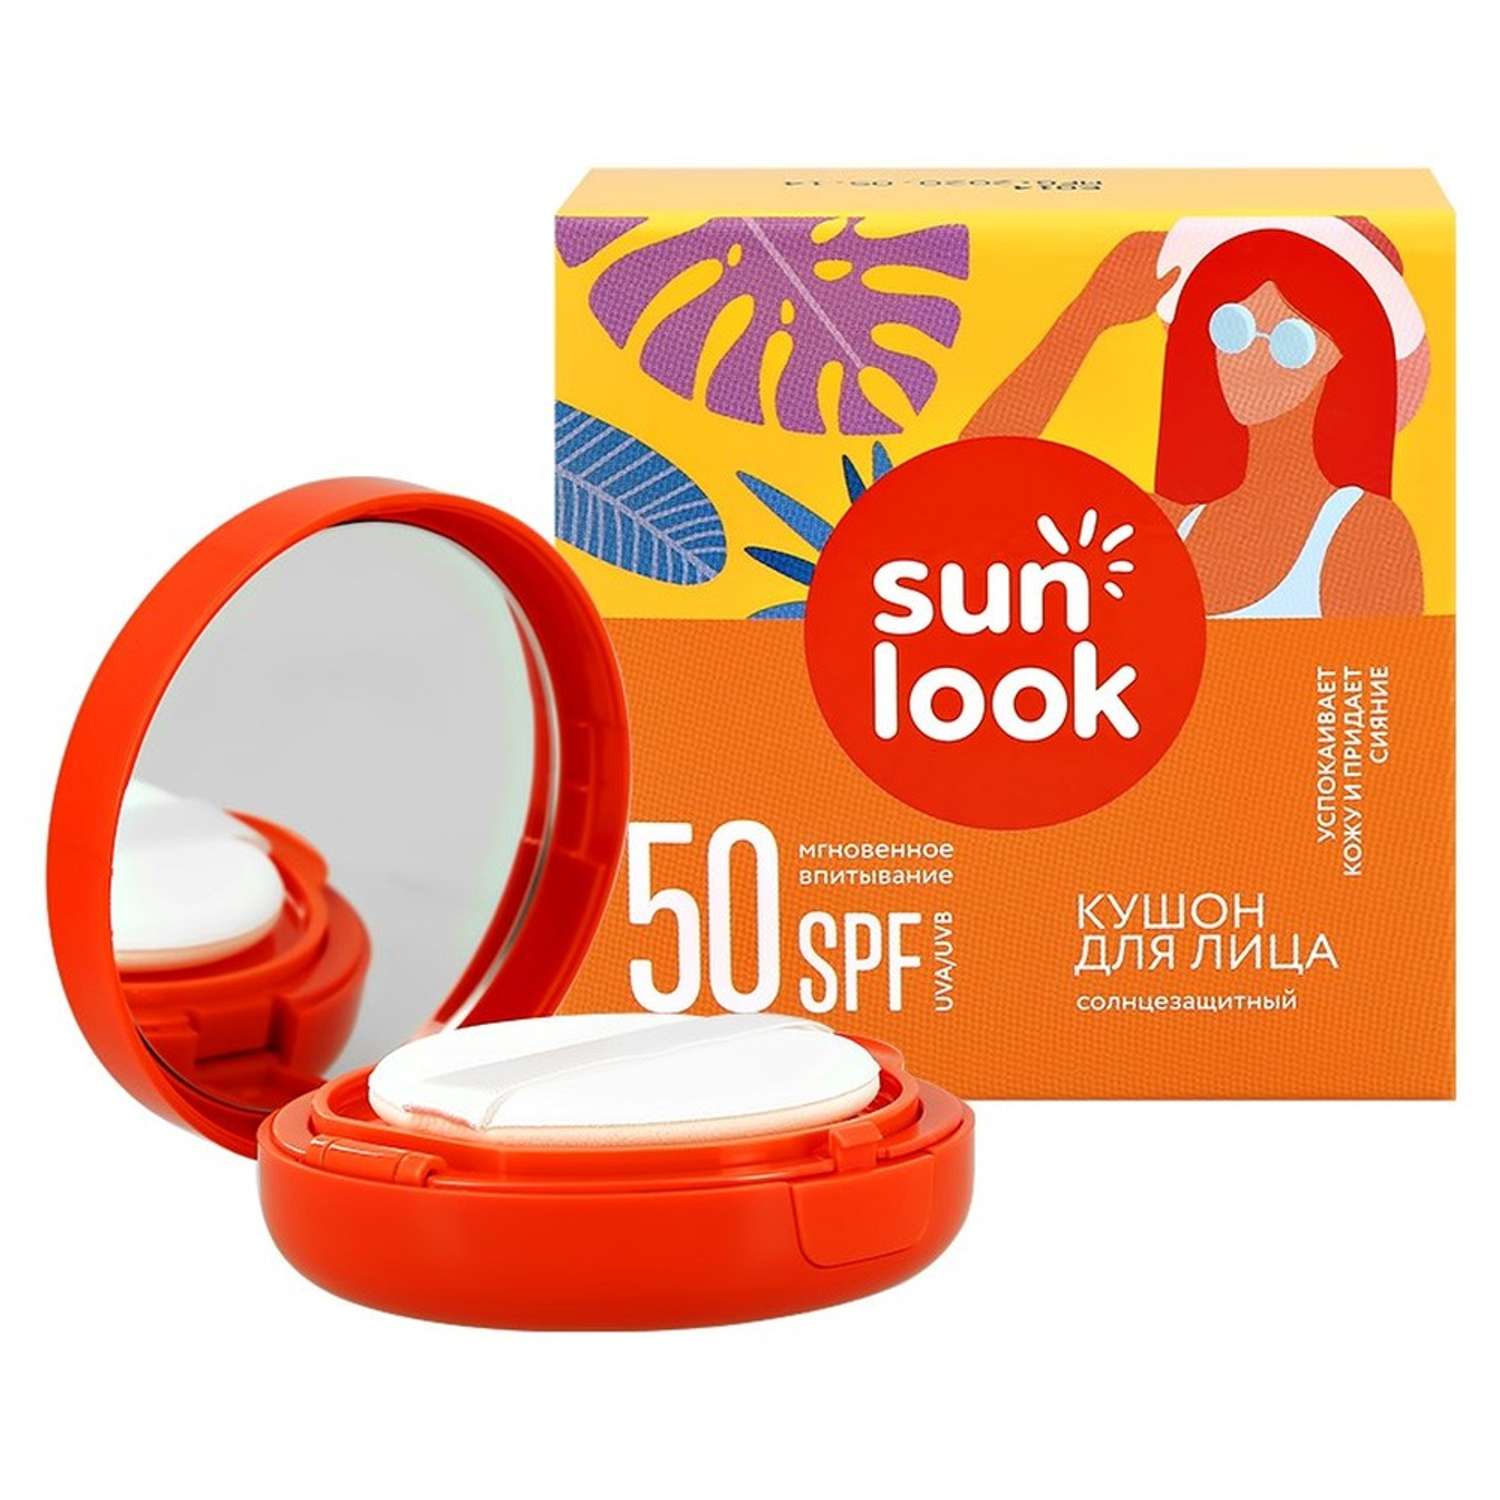 Кушон для лица SUN LOOK солнцезащитный SPF-50 - фото 3